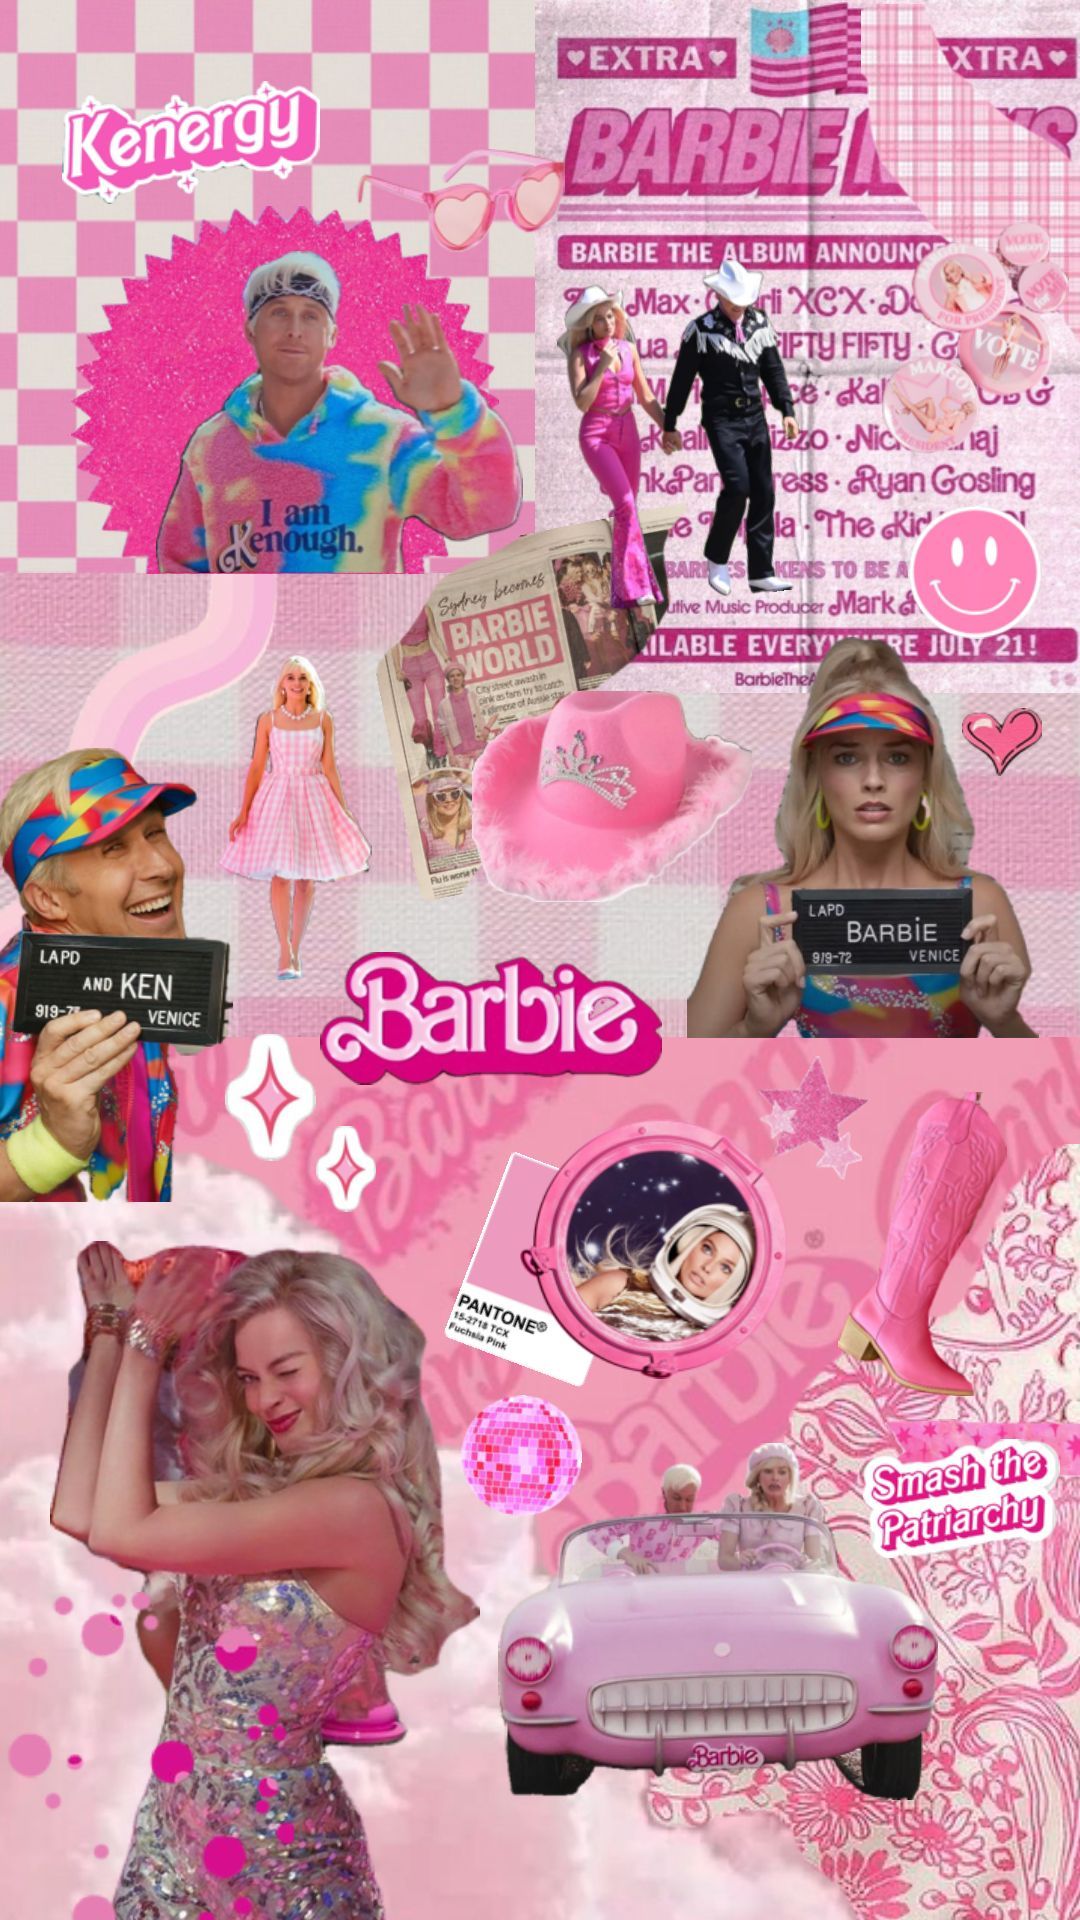 Aesthetic wallpaper by barbie - Barbie